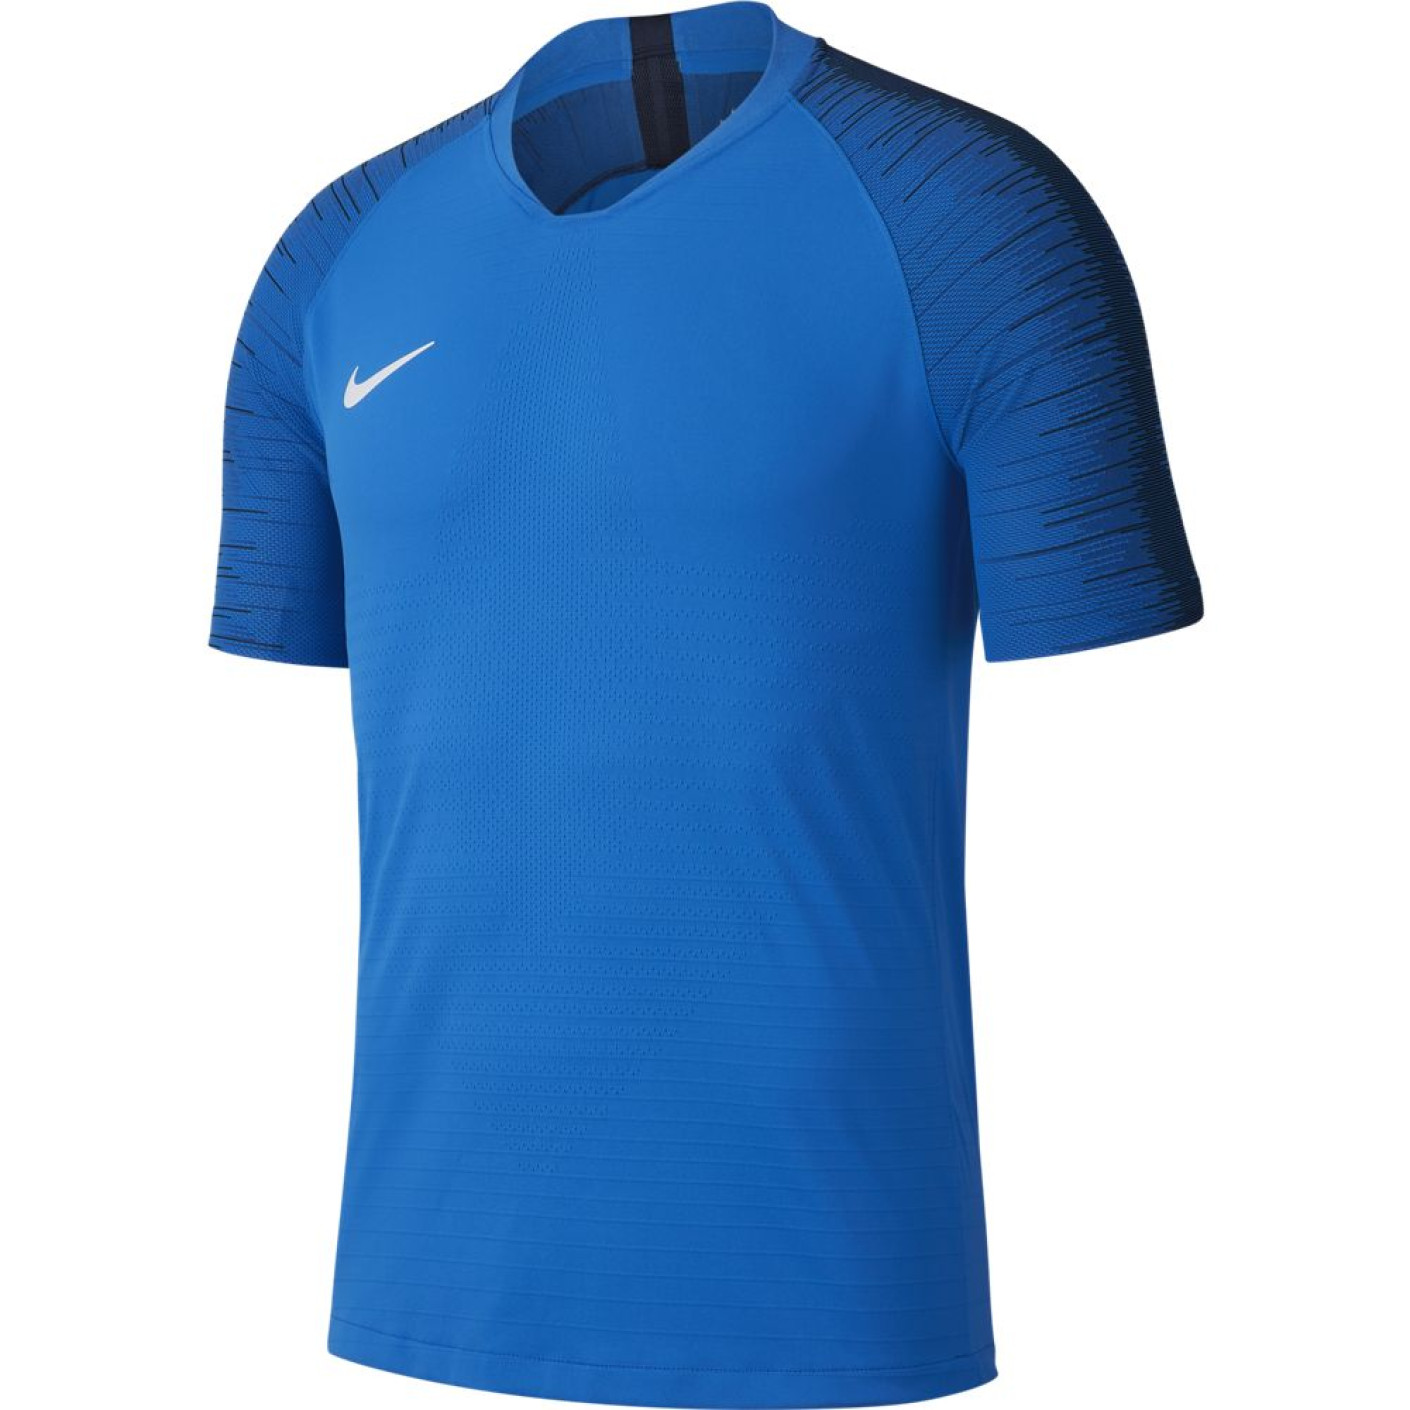 Nike VaporKnit II Football Shirt Blue Royal